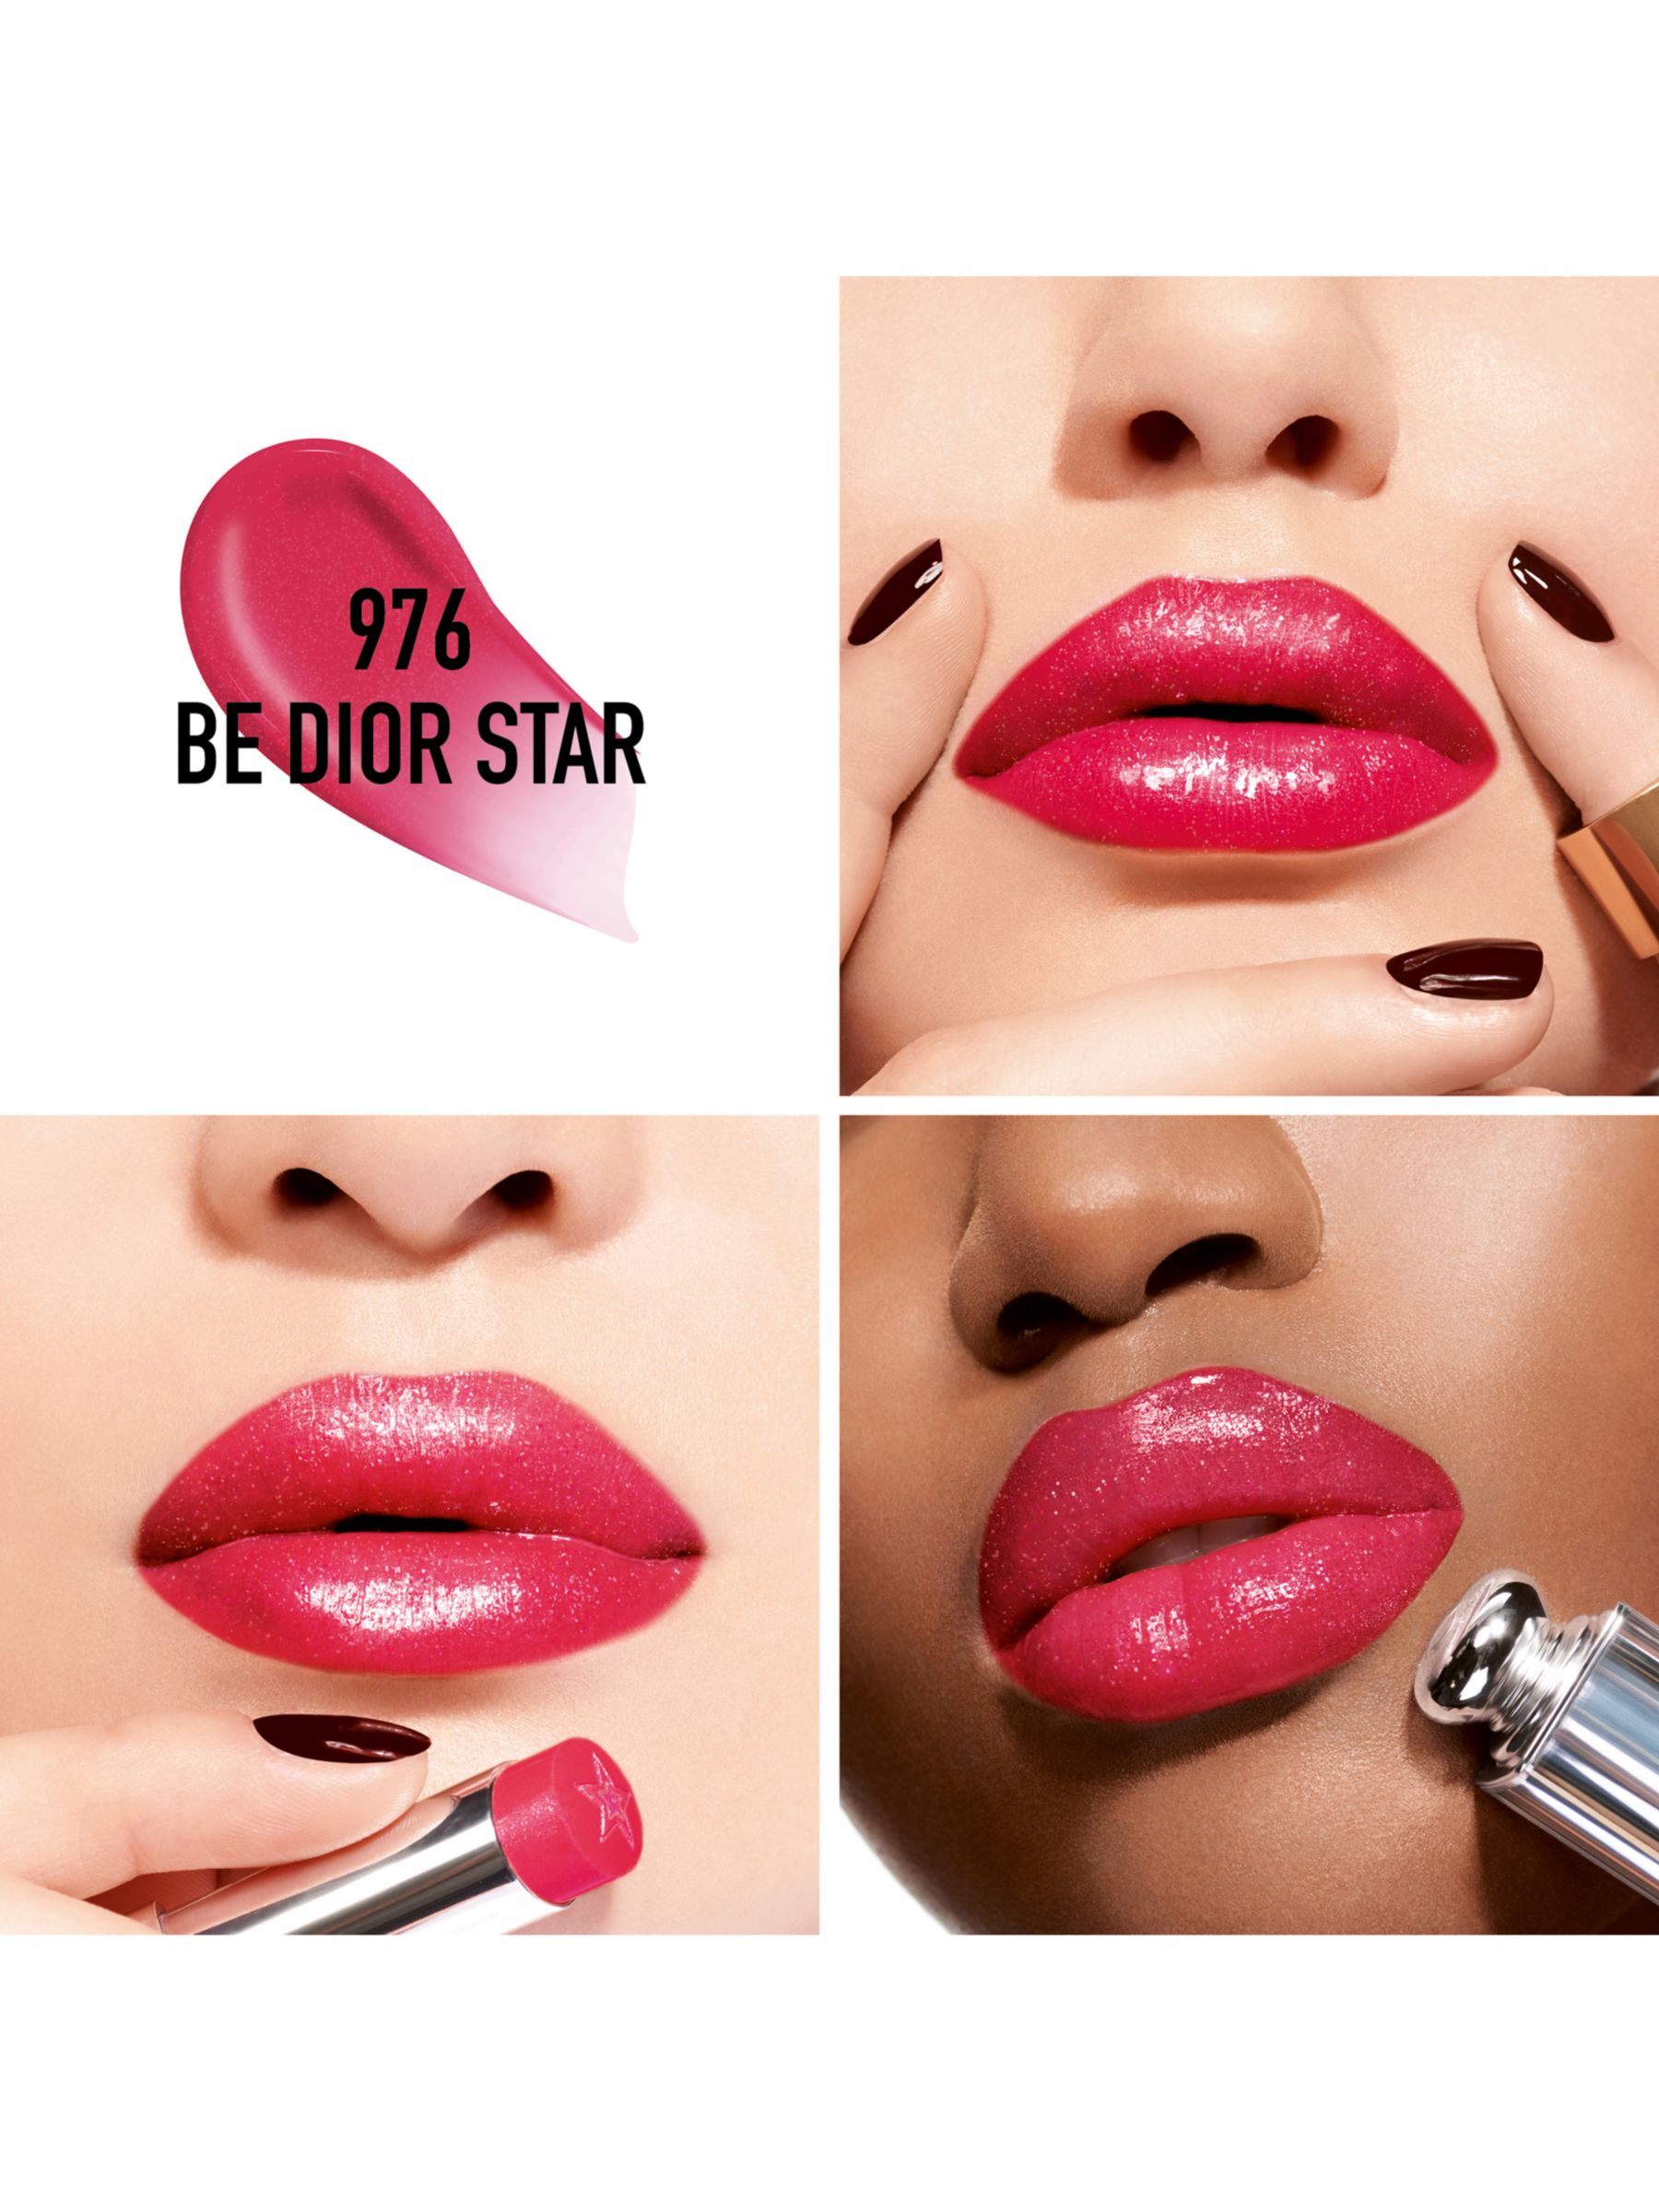 dior 536 lipstick